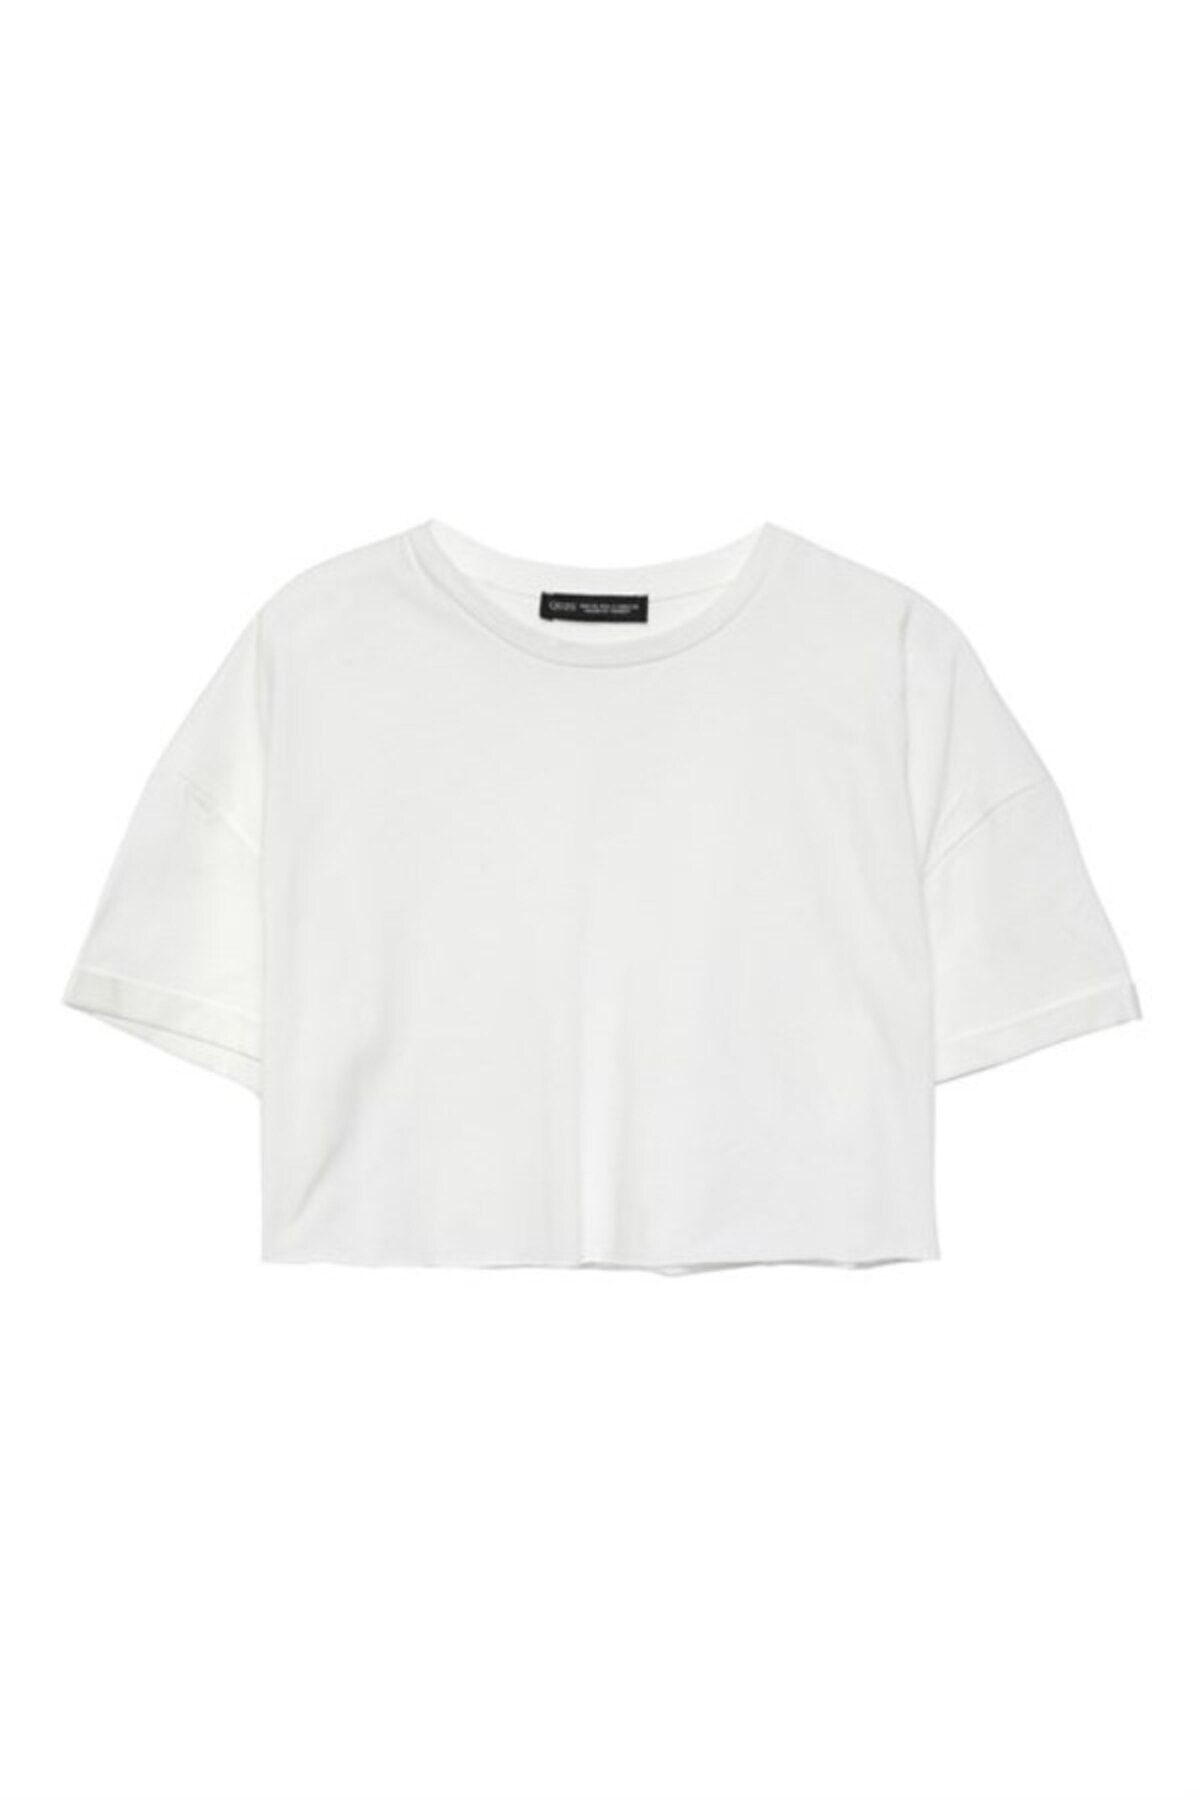 Quzu Basic beyaz crop tişört